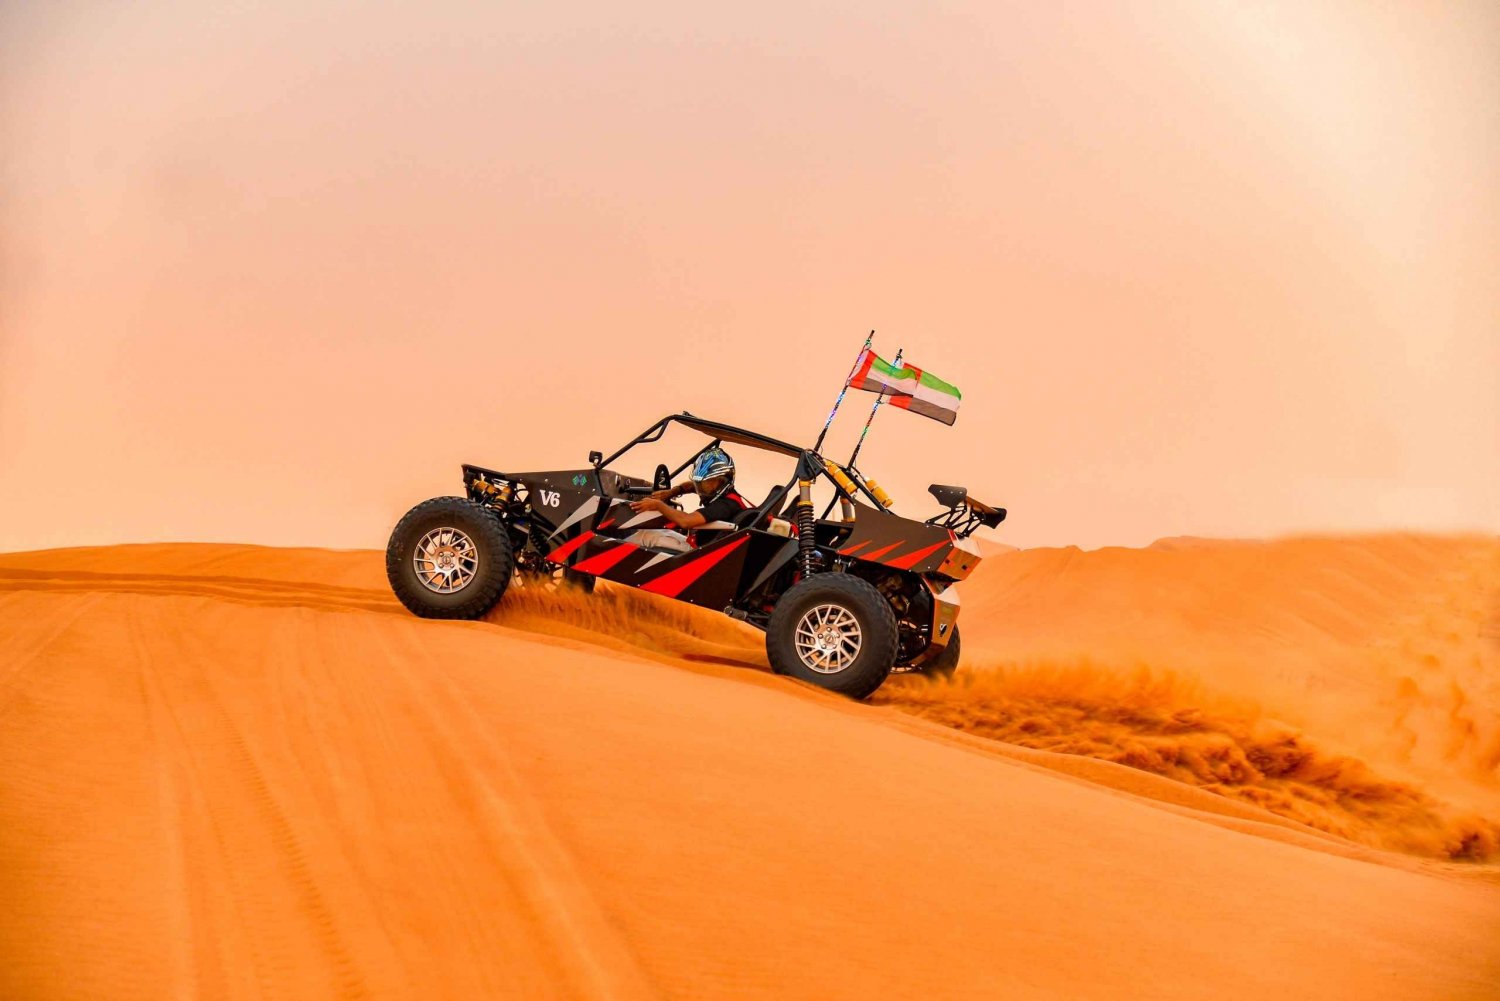 3000cc Dune Buggy Adventure + pustynne safari - prywatne doświadczenie